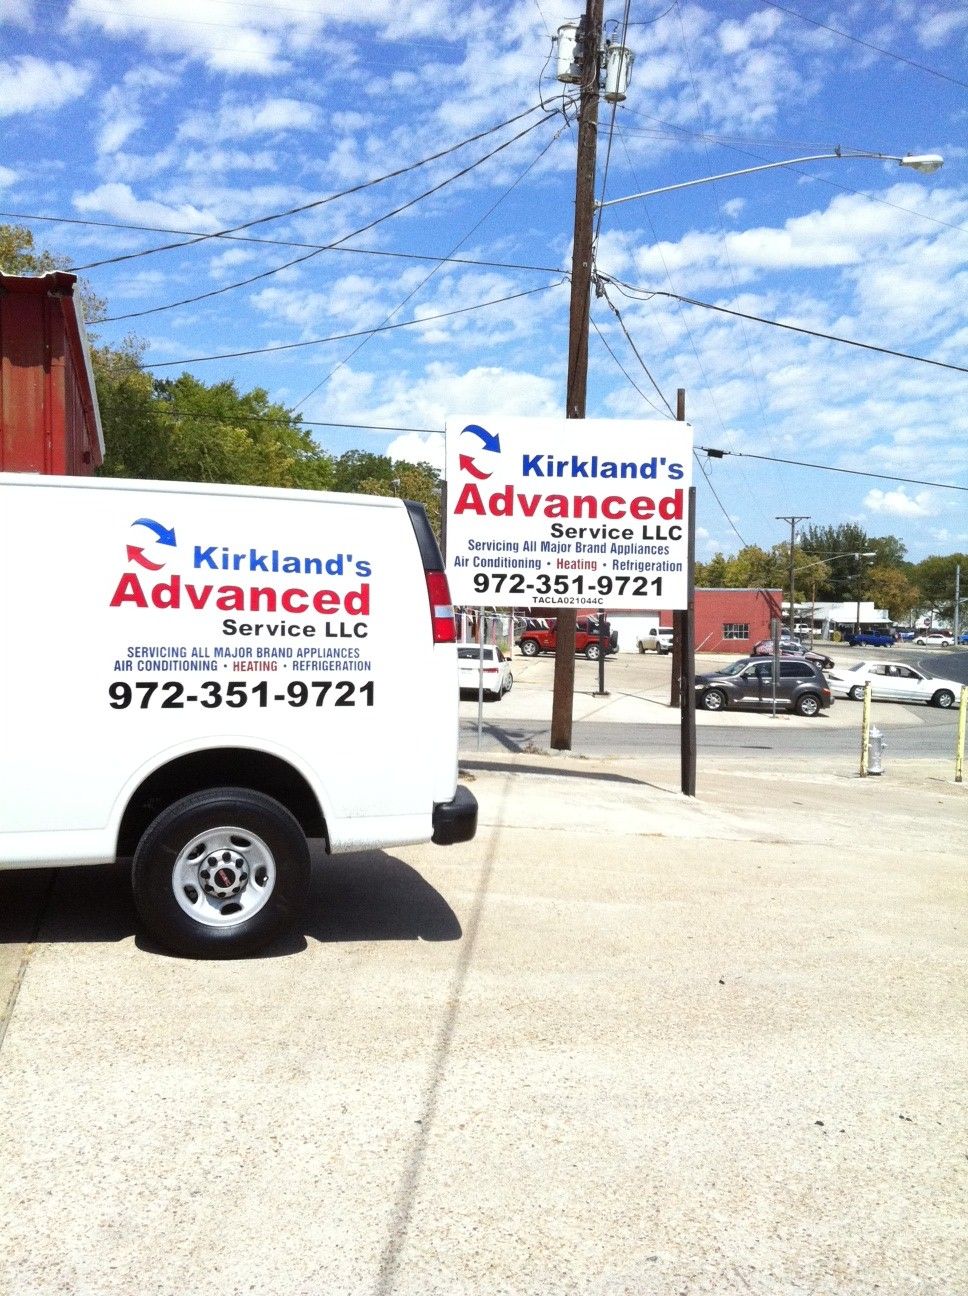 Kirkland's Advanced Service LLC